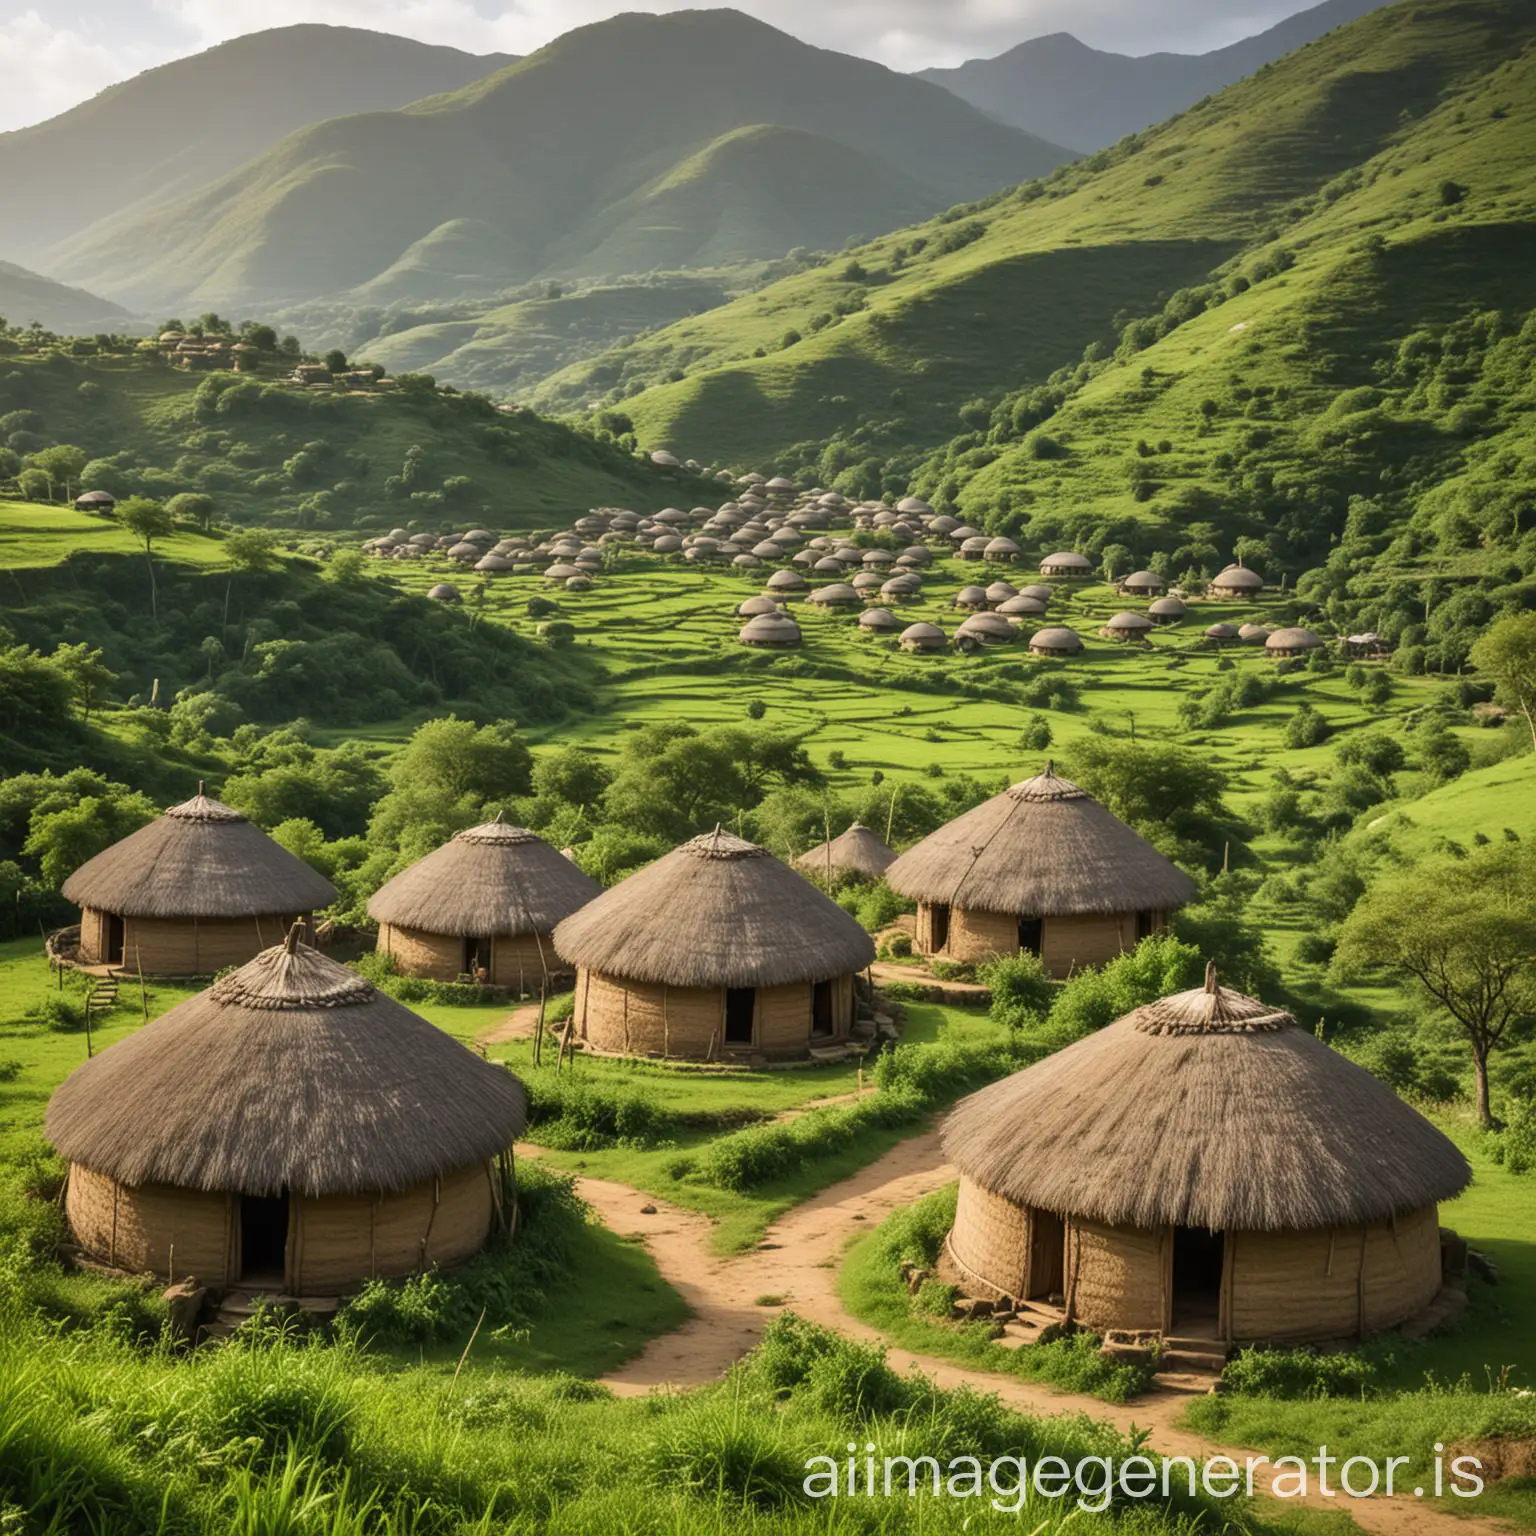 Scenic-Shona-Village-Traditional-Round-Huts-Amidst-Lush-Green-Hills